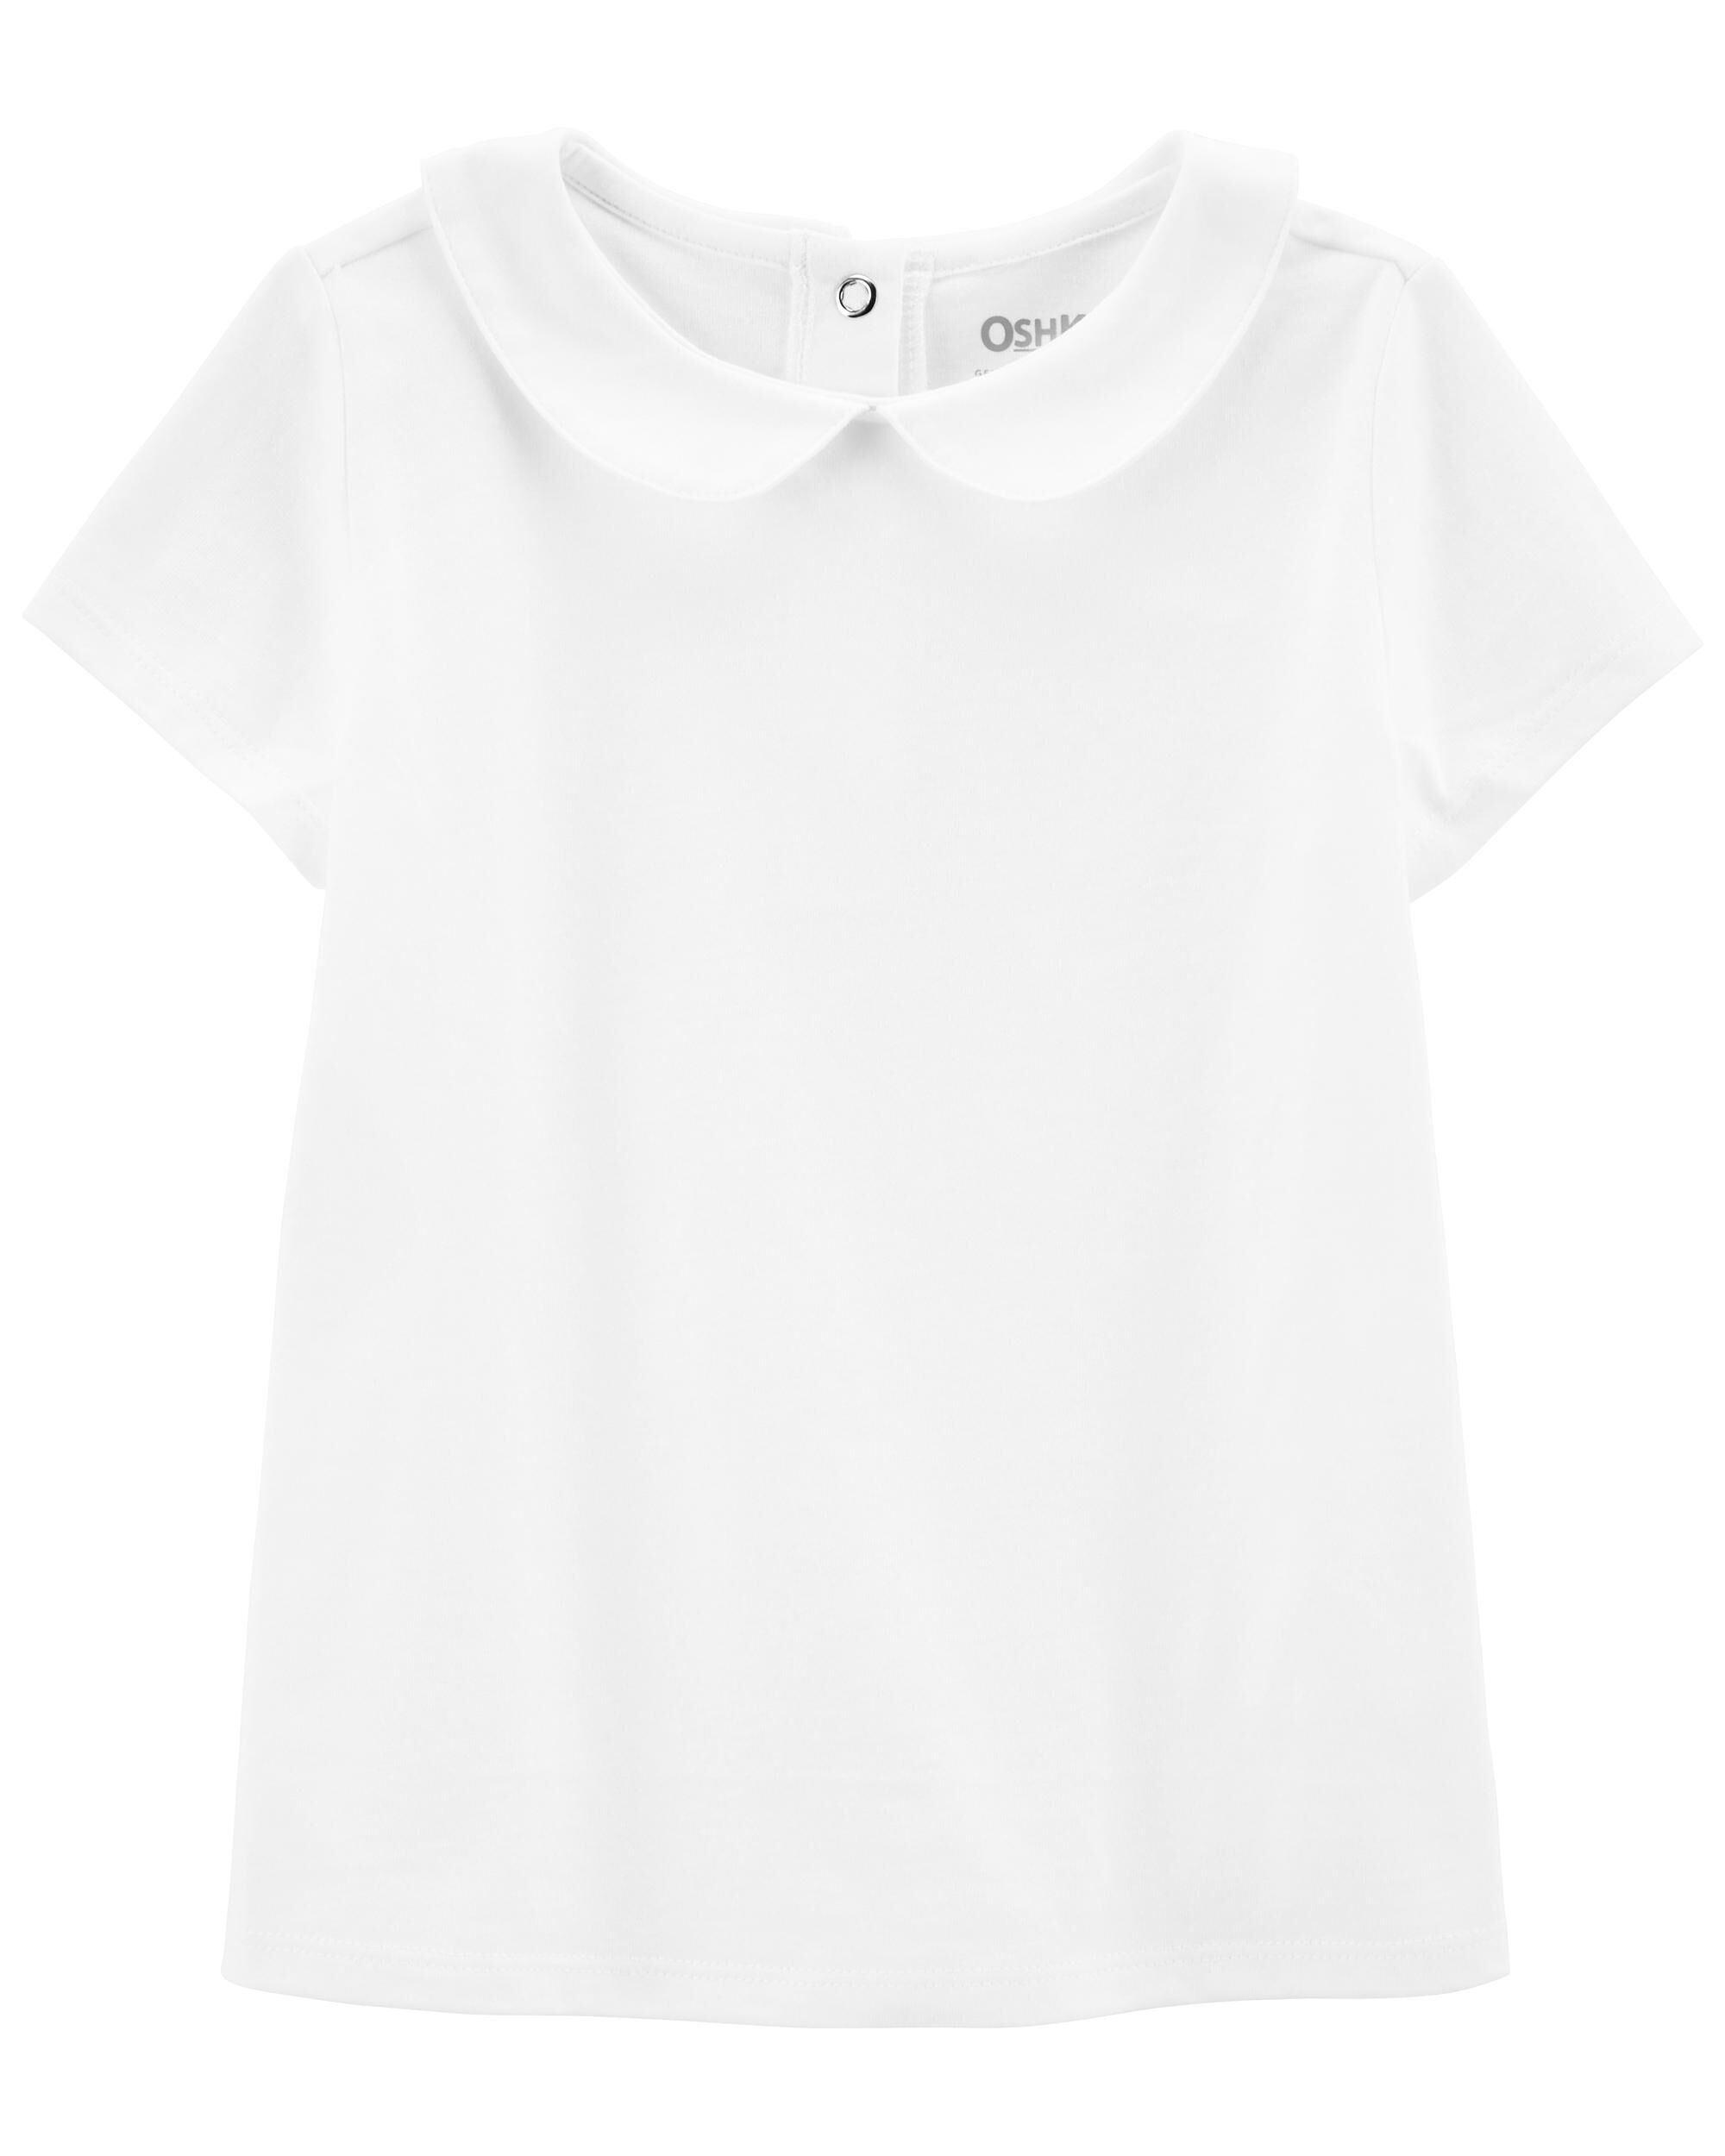 New OshKosh Girls Solid White Peter Pan Collar Shirt Top SS 9 12 18 24 2T 3 4 5T 